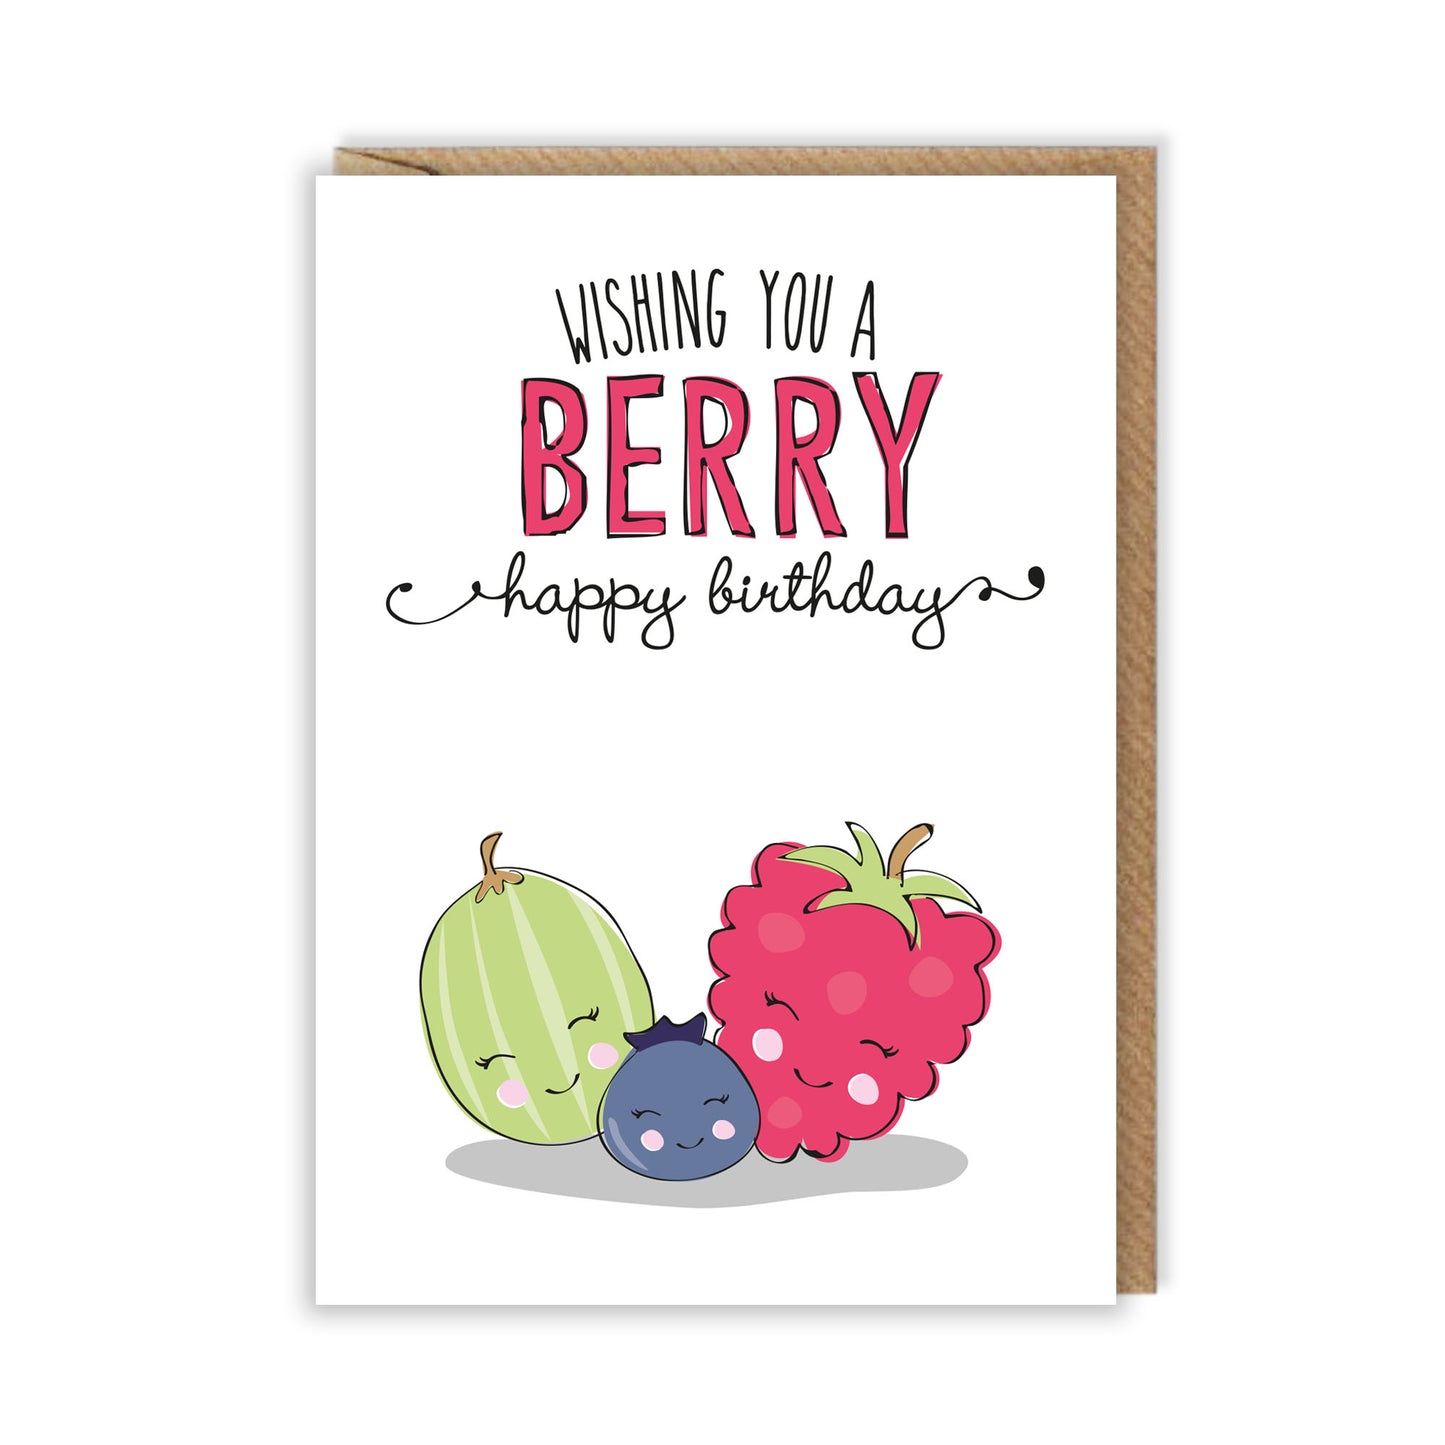 Happy birthday - a berry happy birthday